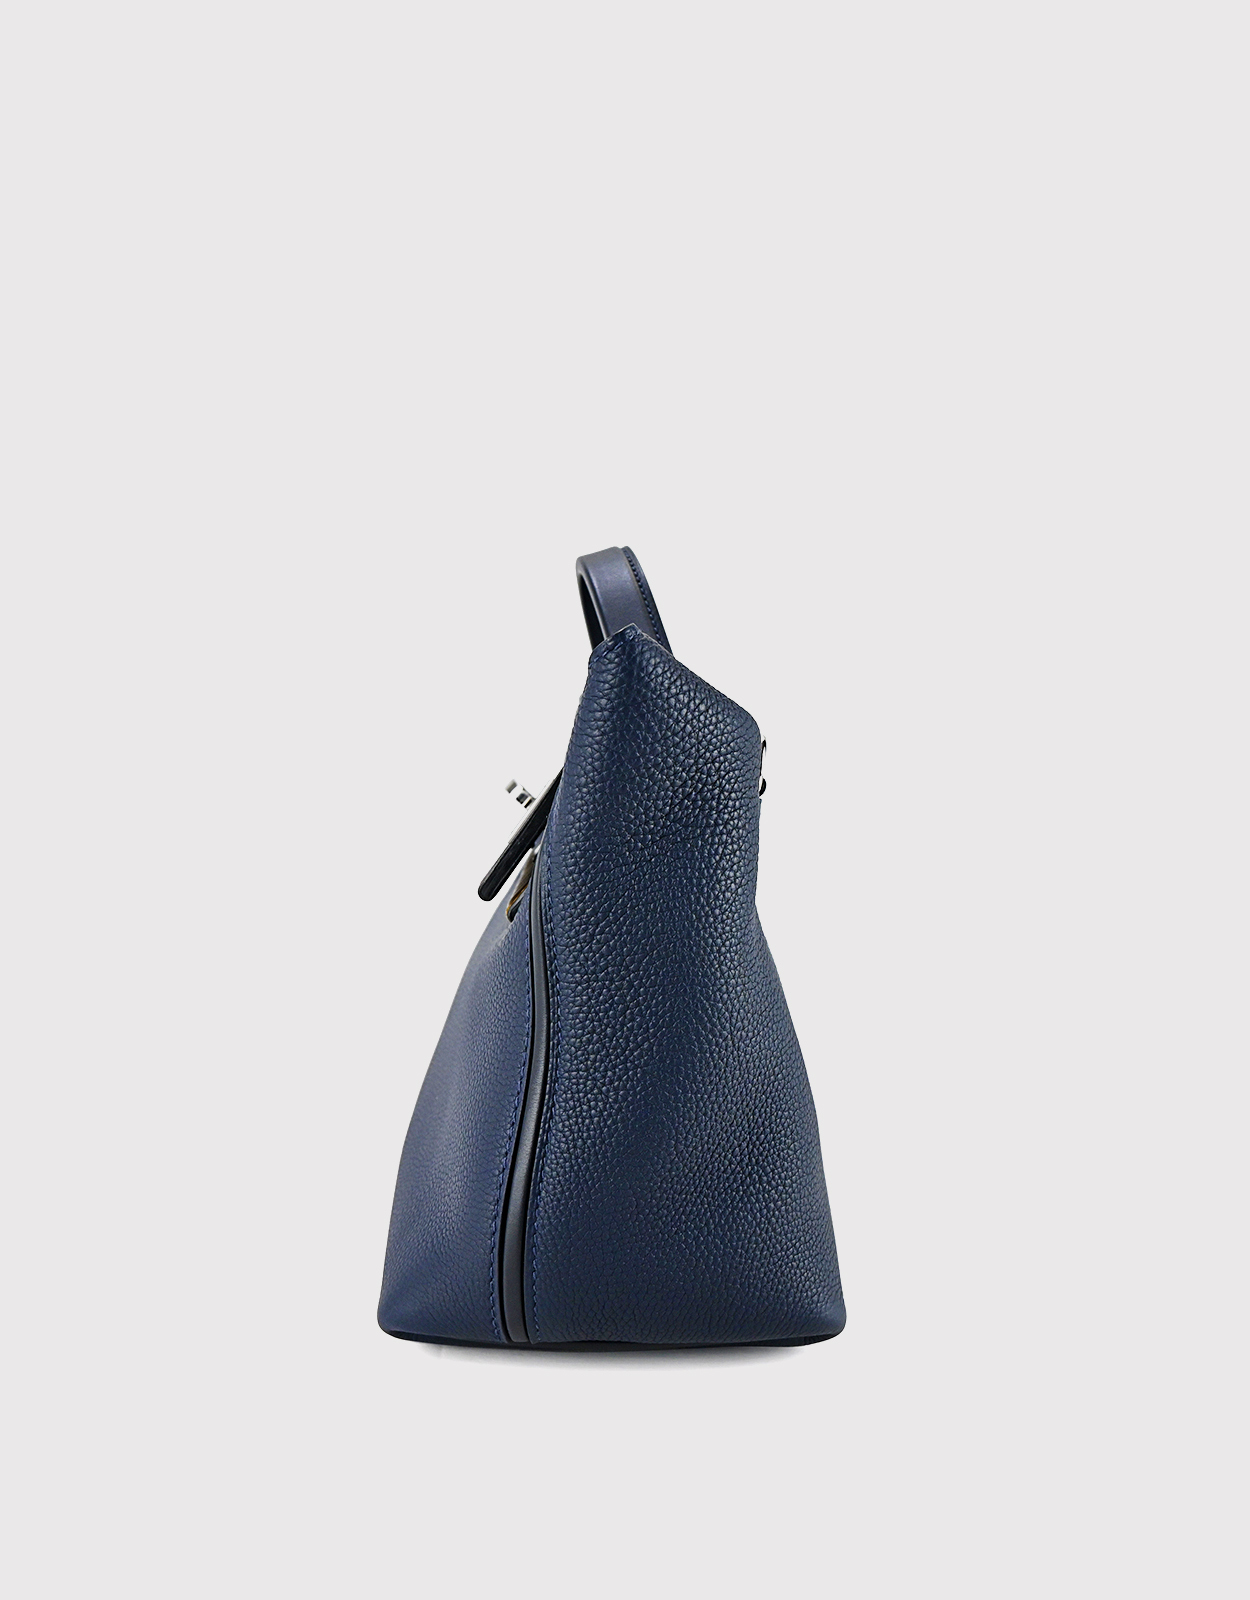 Hermès - Hermès 24/24 29 Togo Leather Handbag-Bleu Nuit Silver Hardware